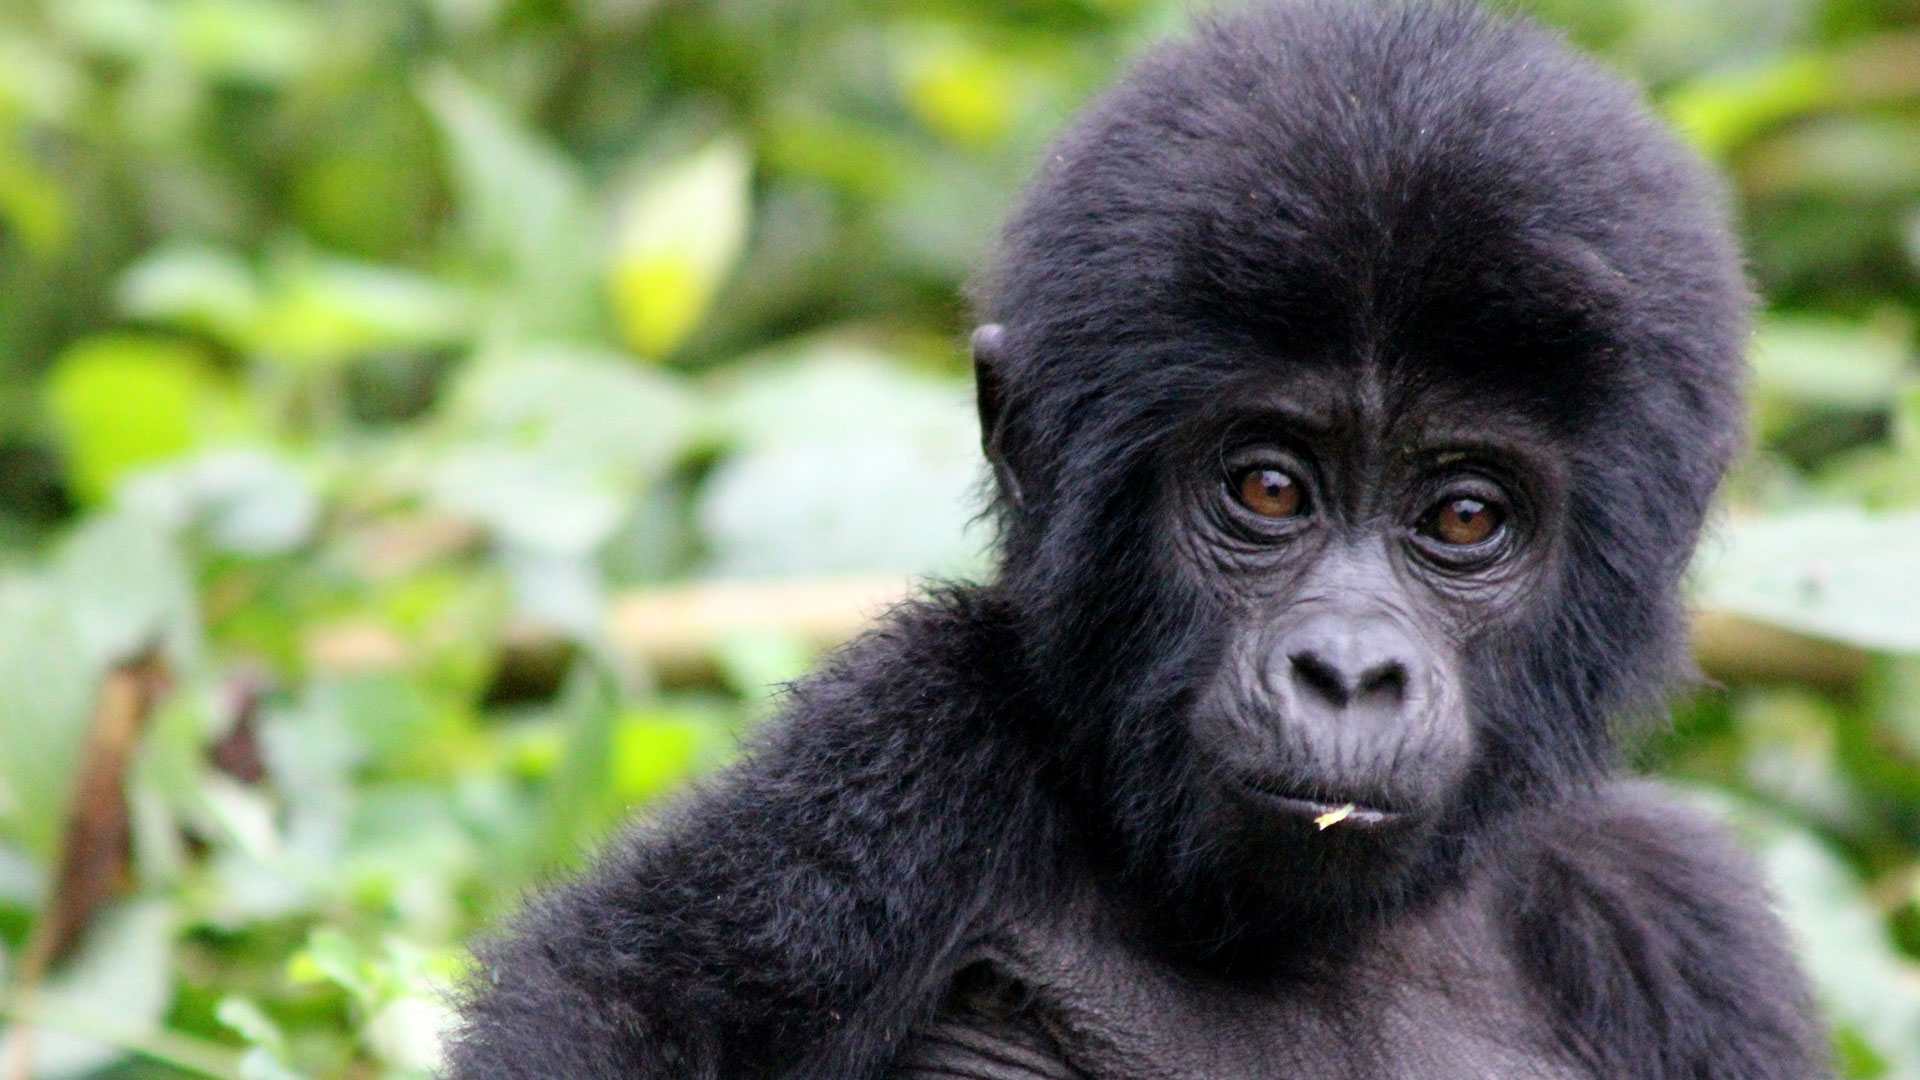 kigali gorilla safari